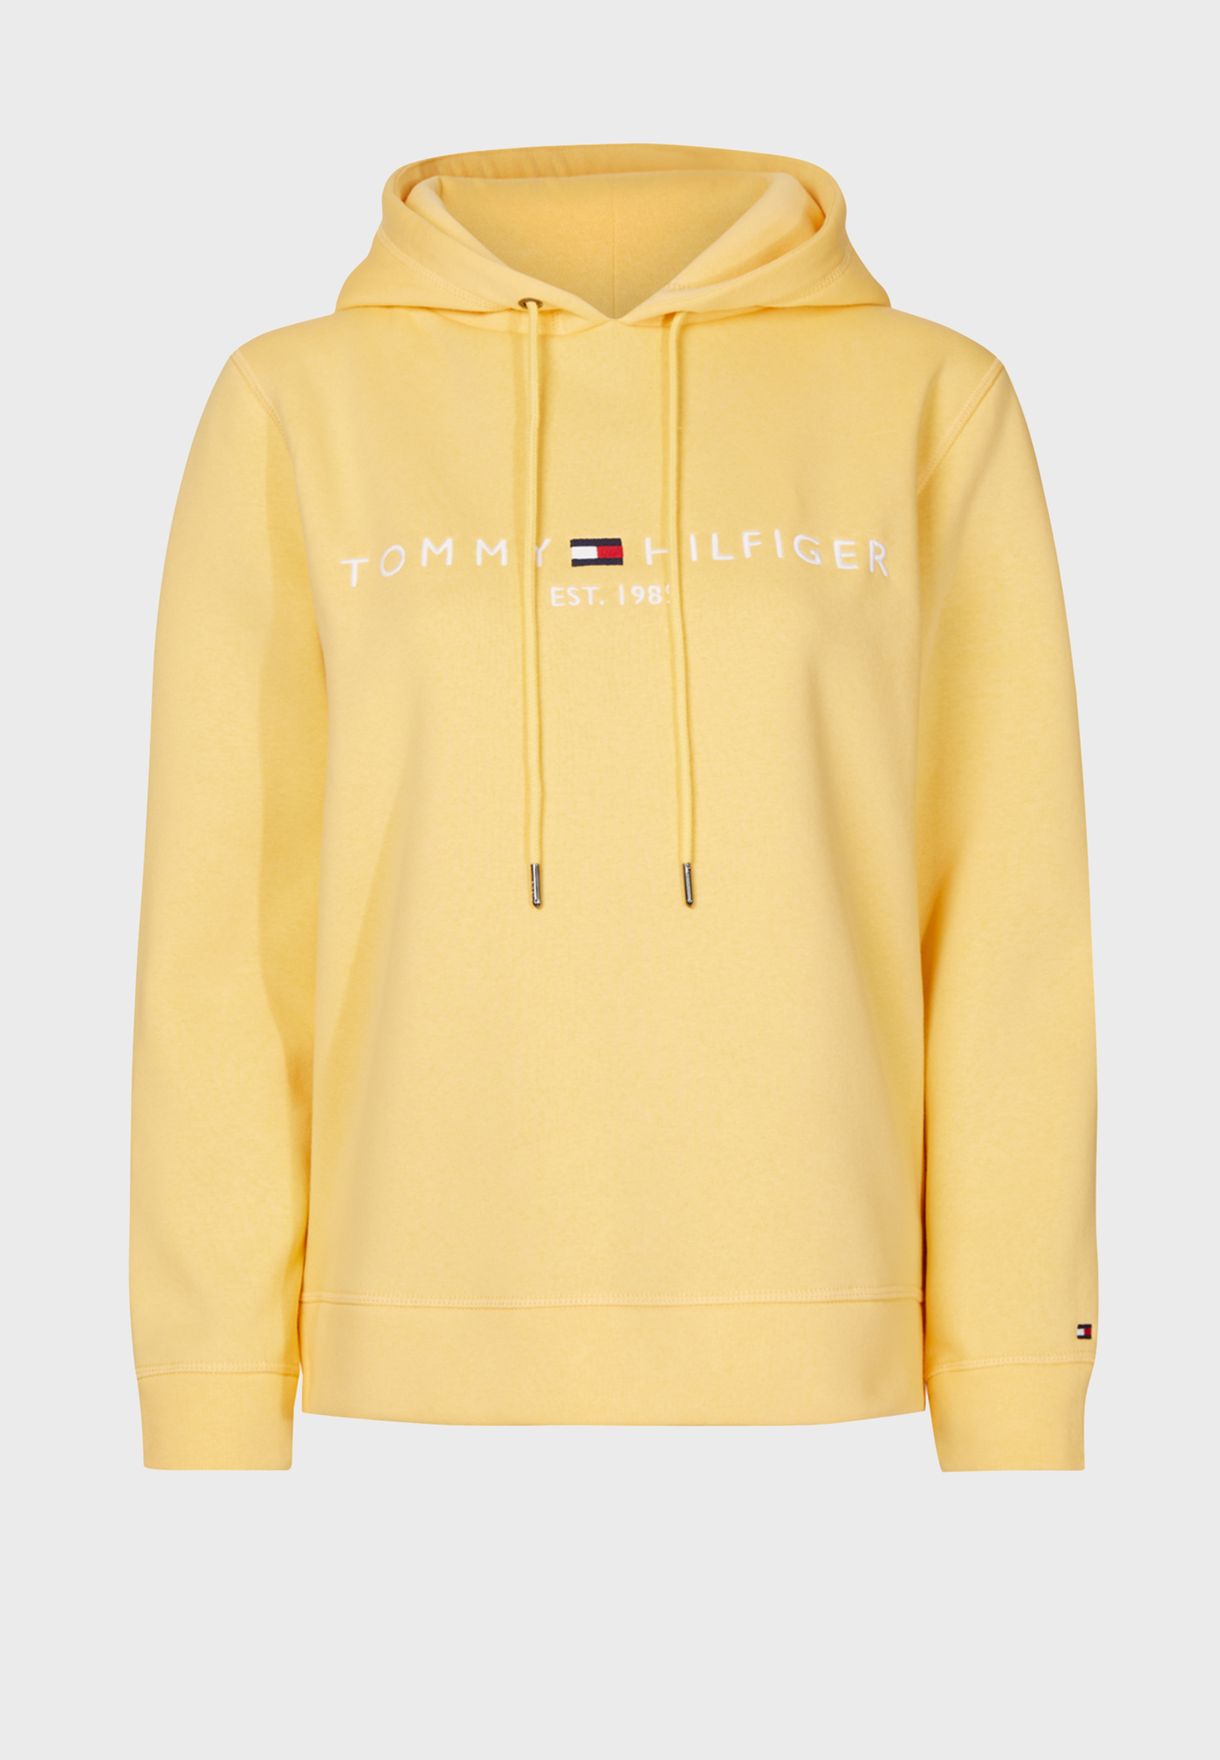 hilfiger yellow hoodie